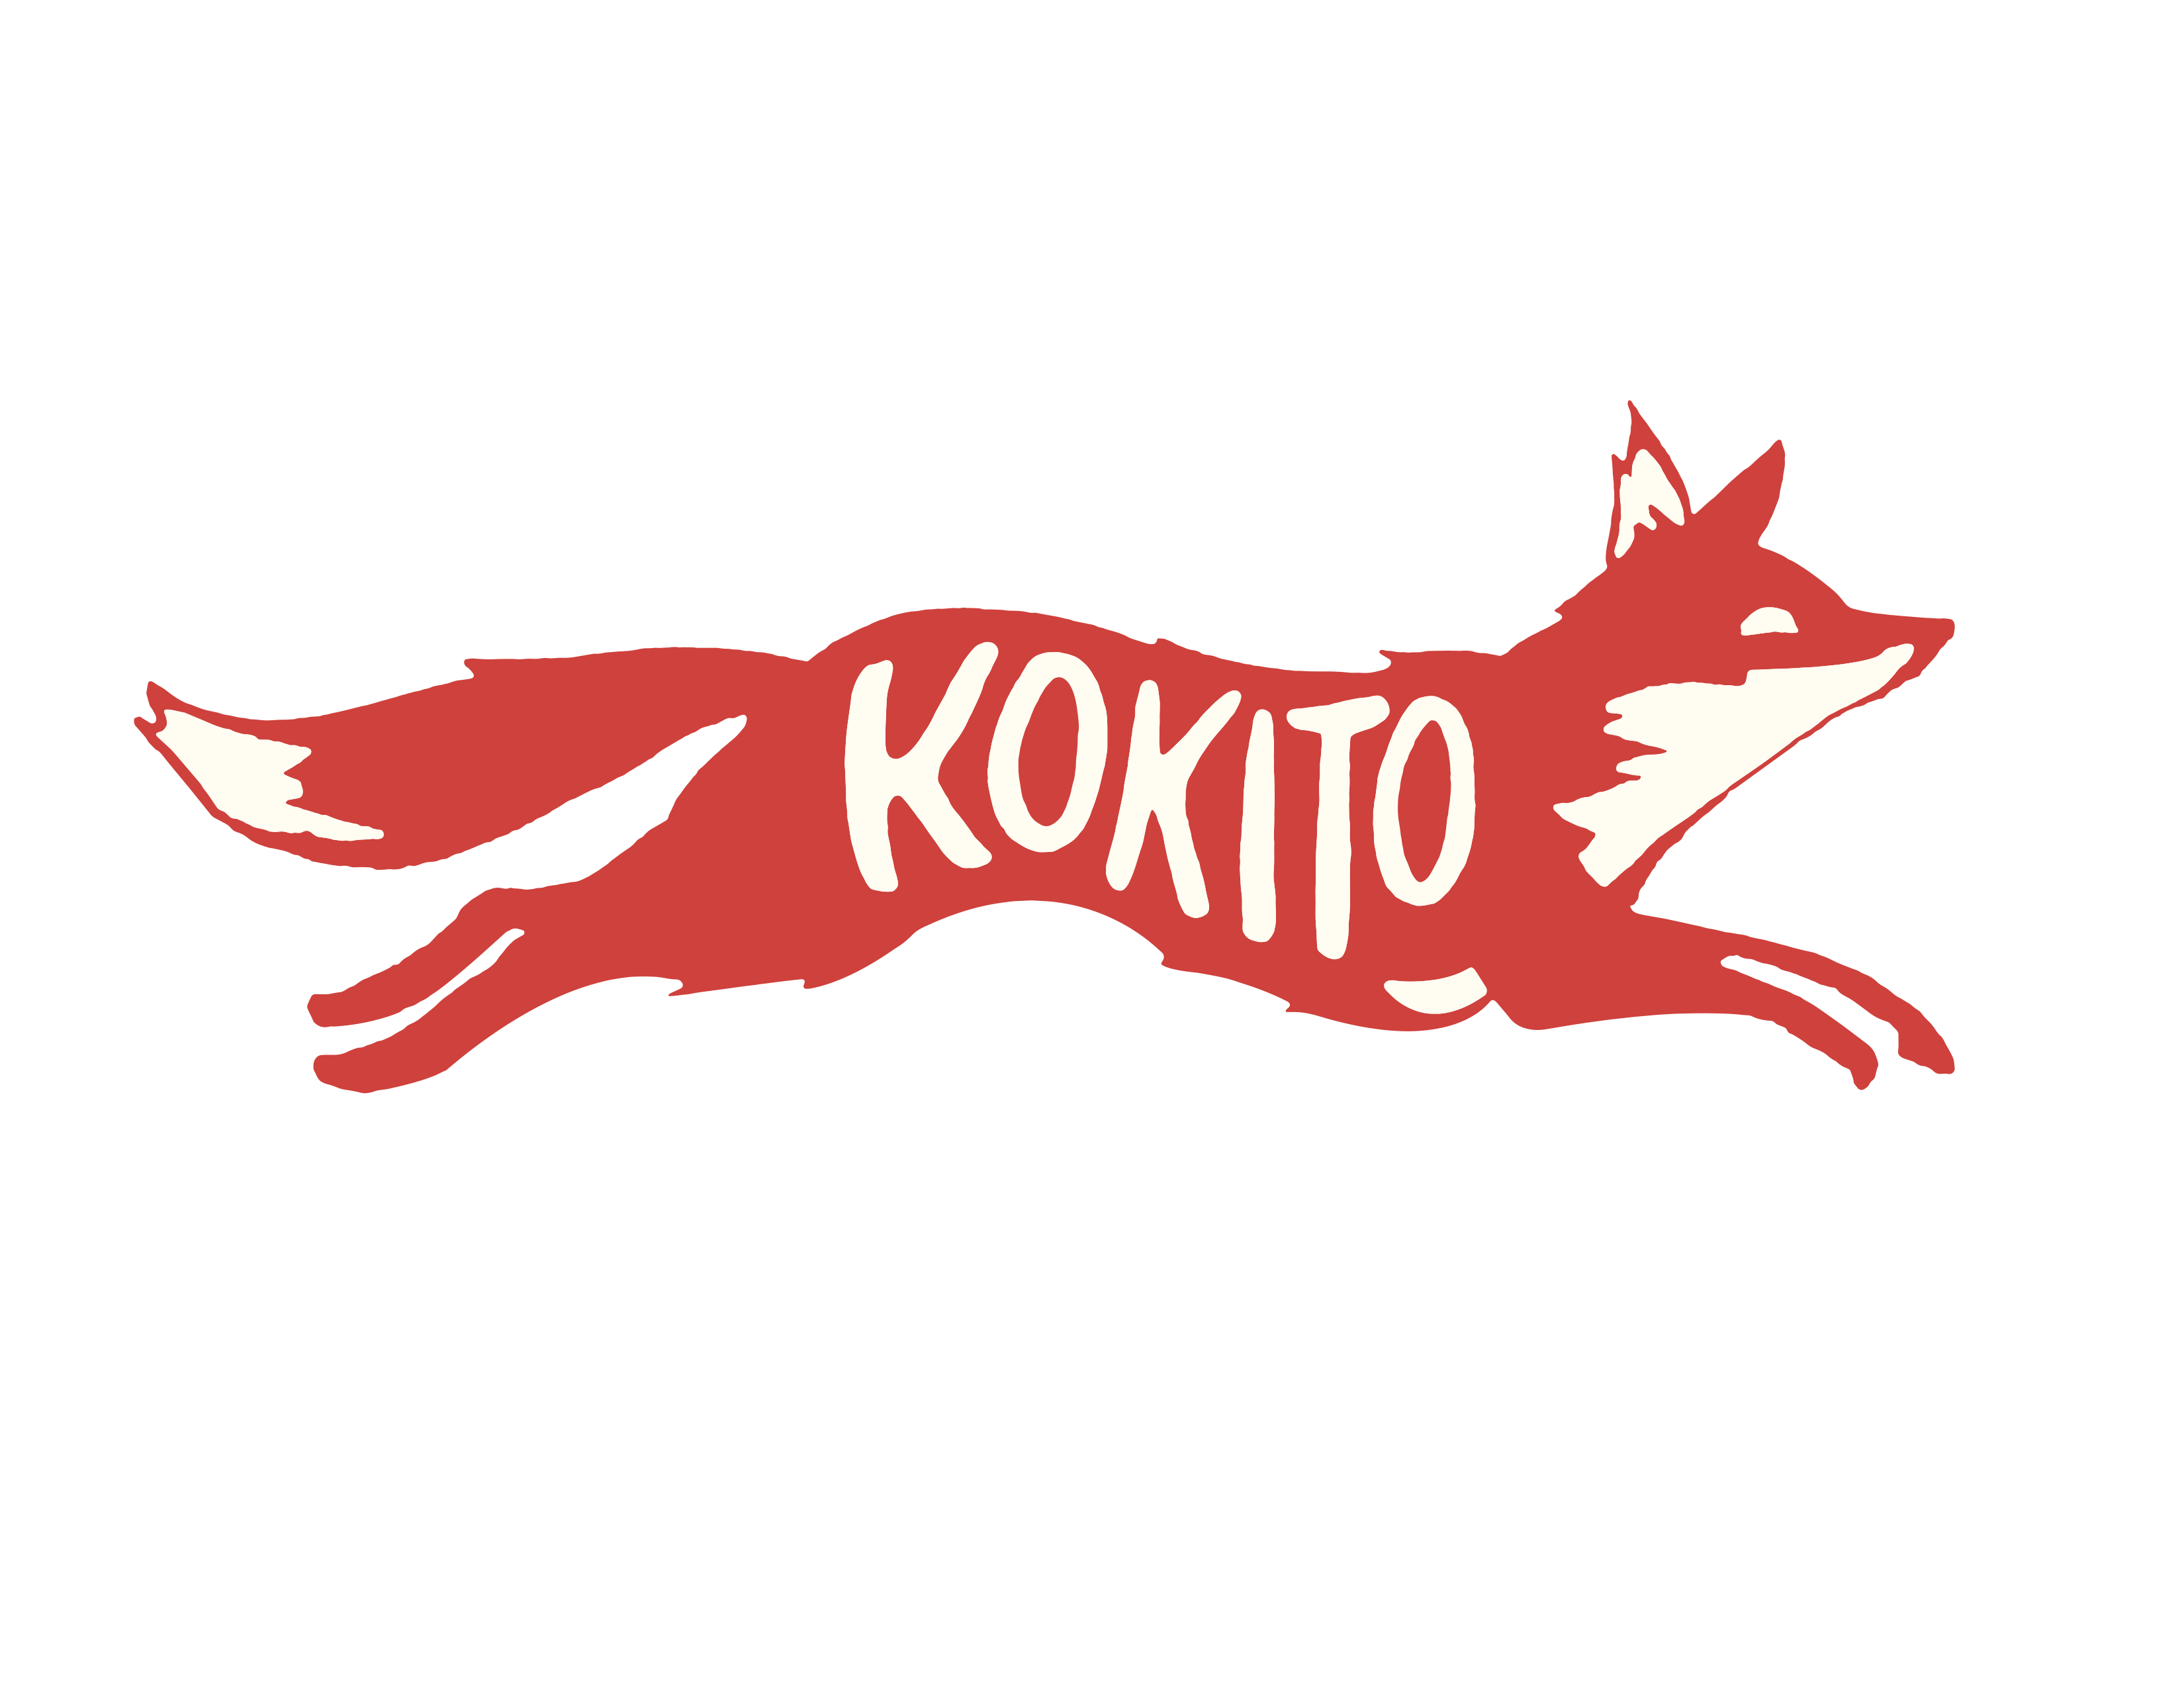 kokito fox running right